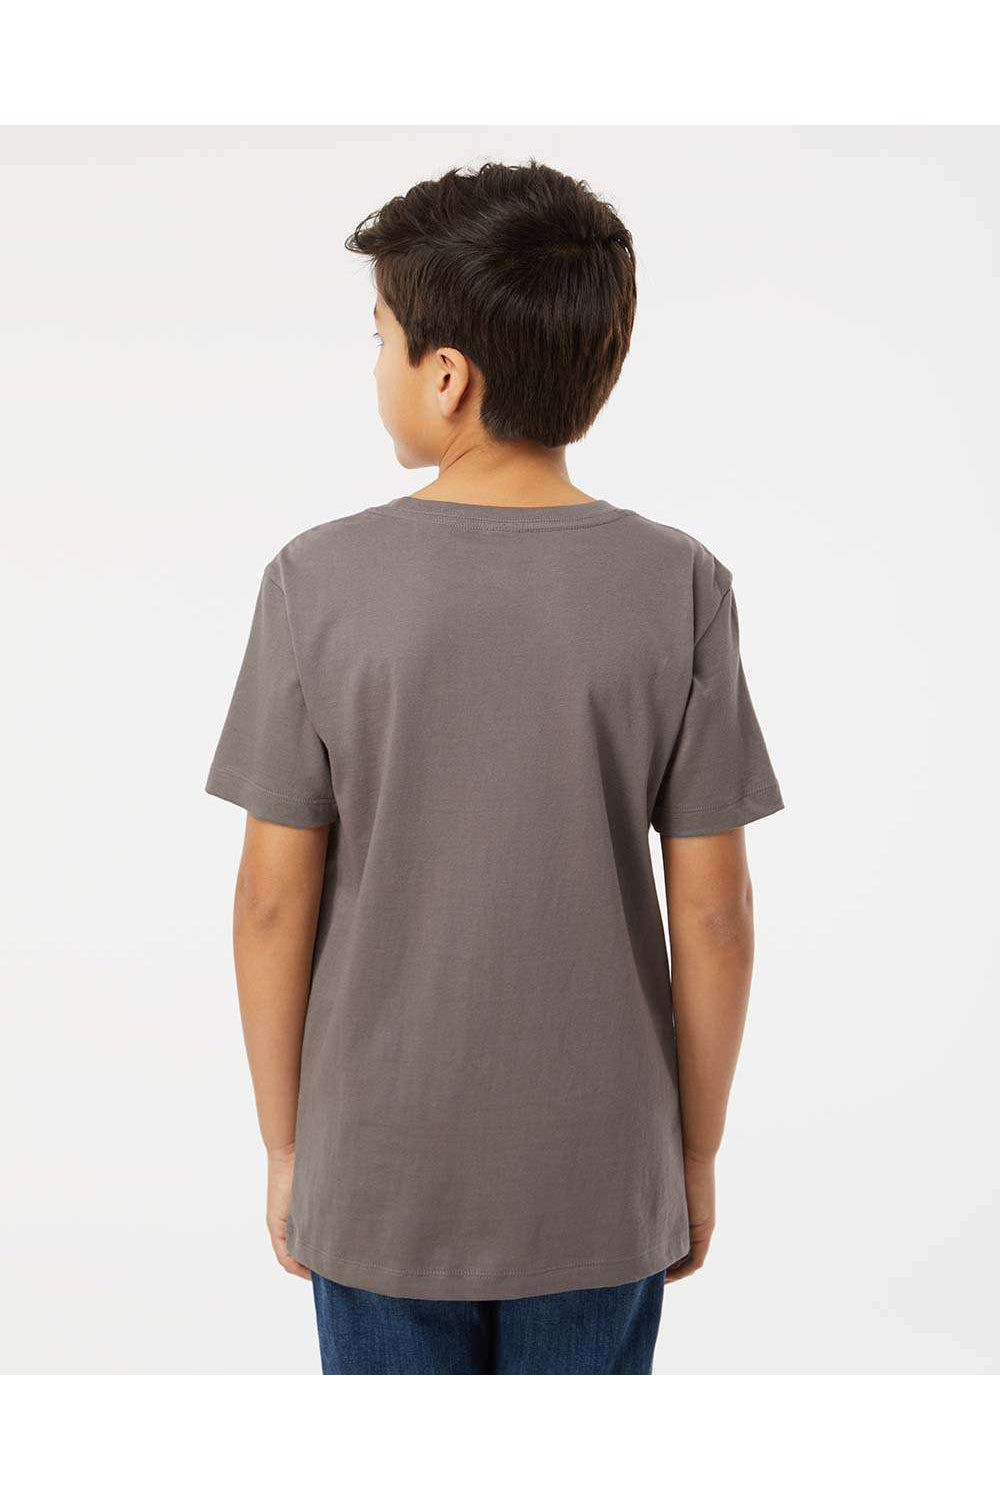 SoftShirts 402 Youth Organic Short Sleeve Crewneck T-Shirt Graphite Grey Model Back